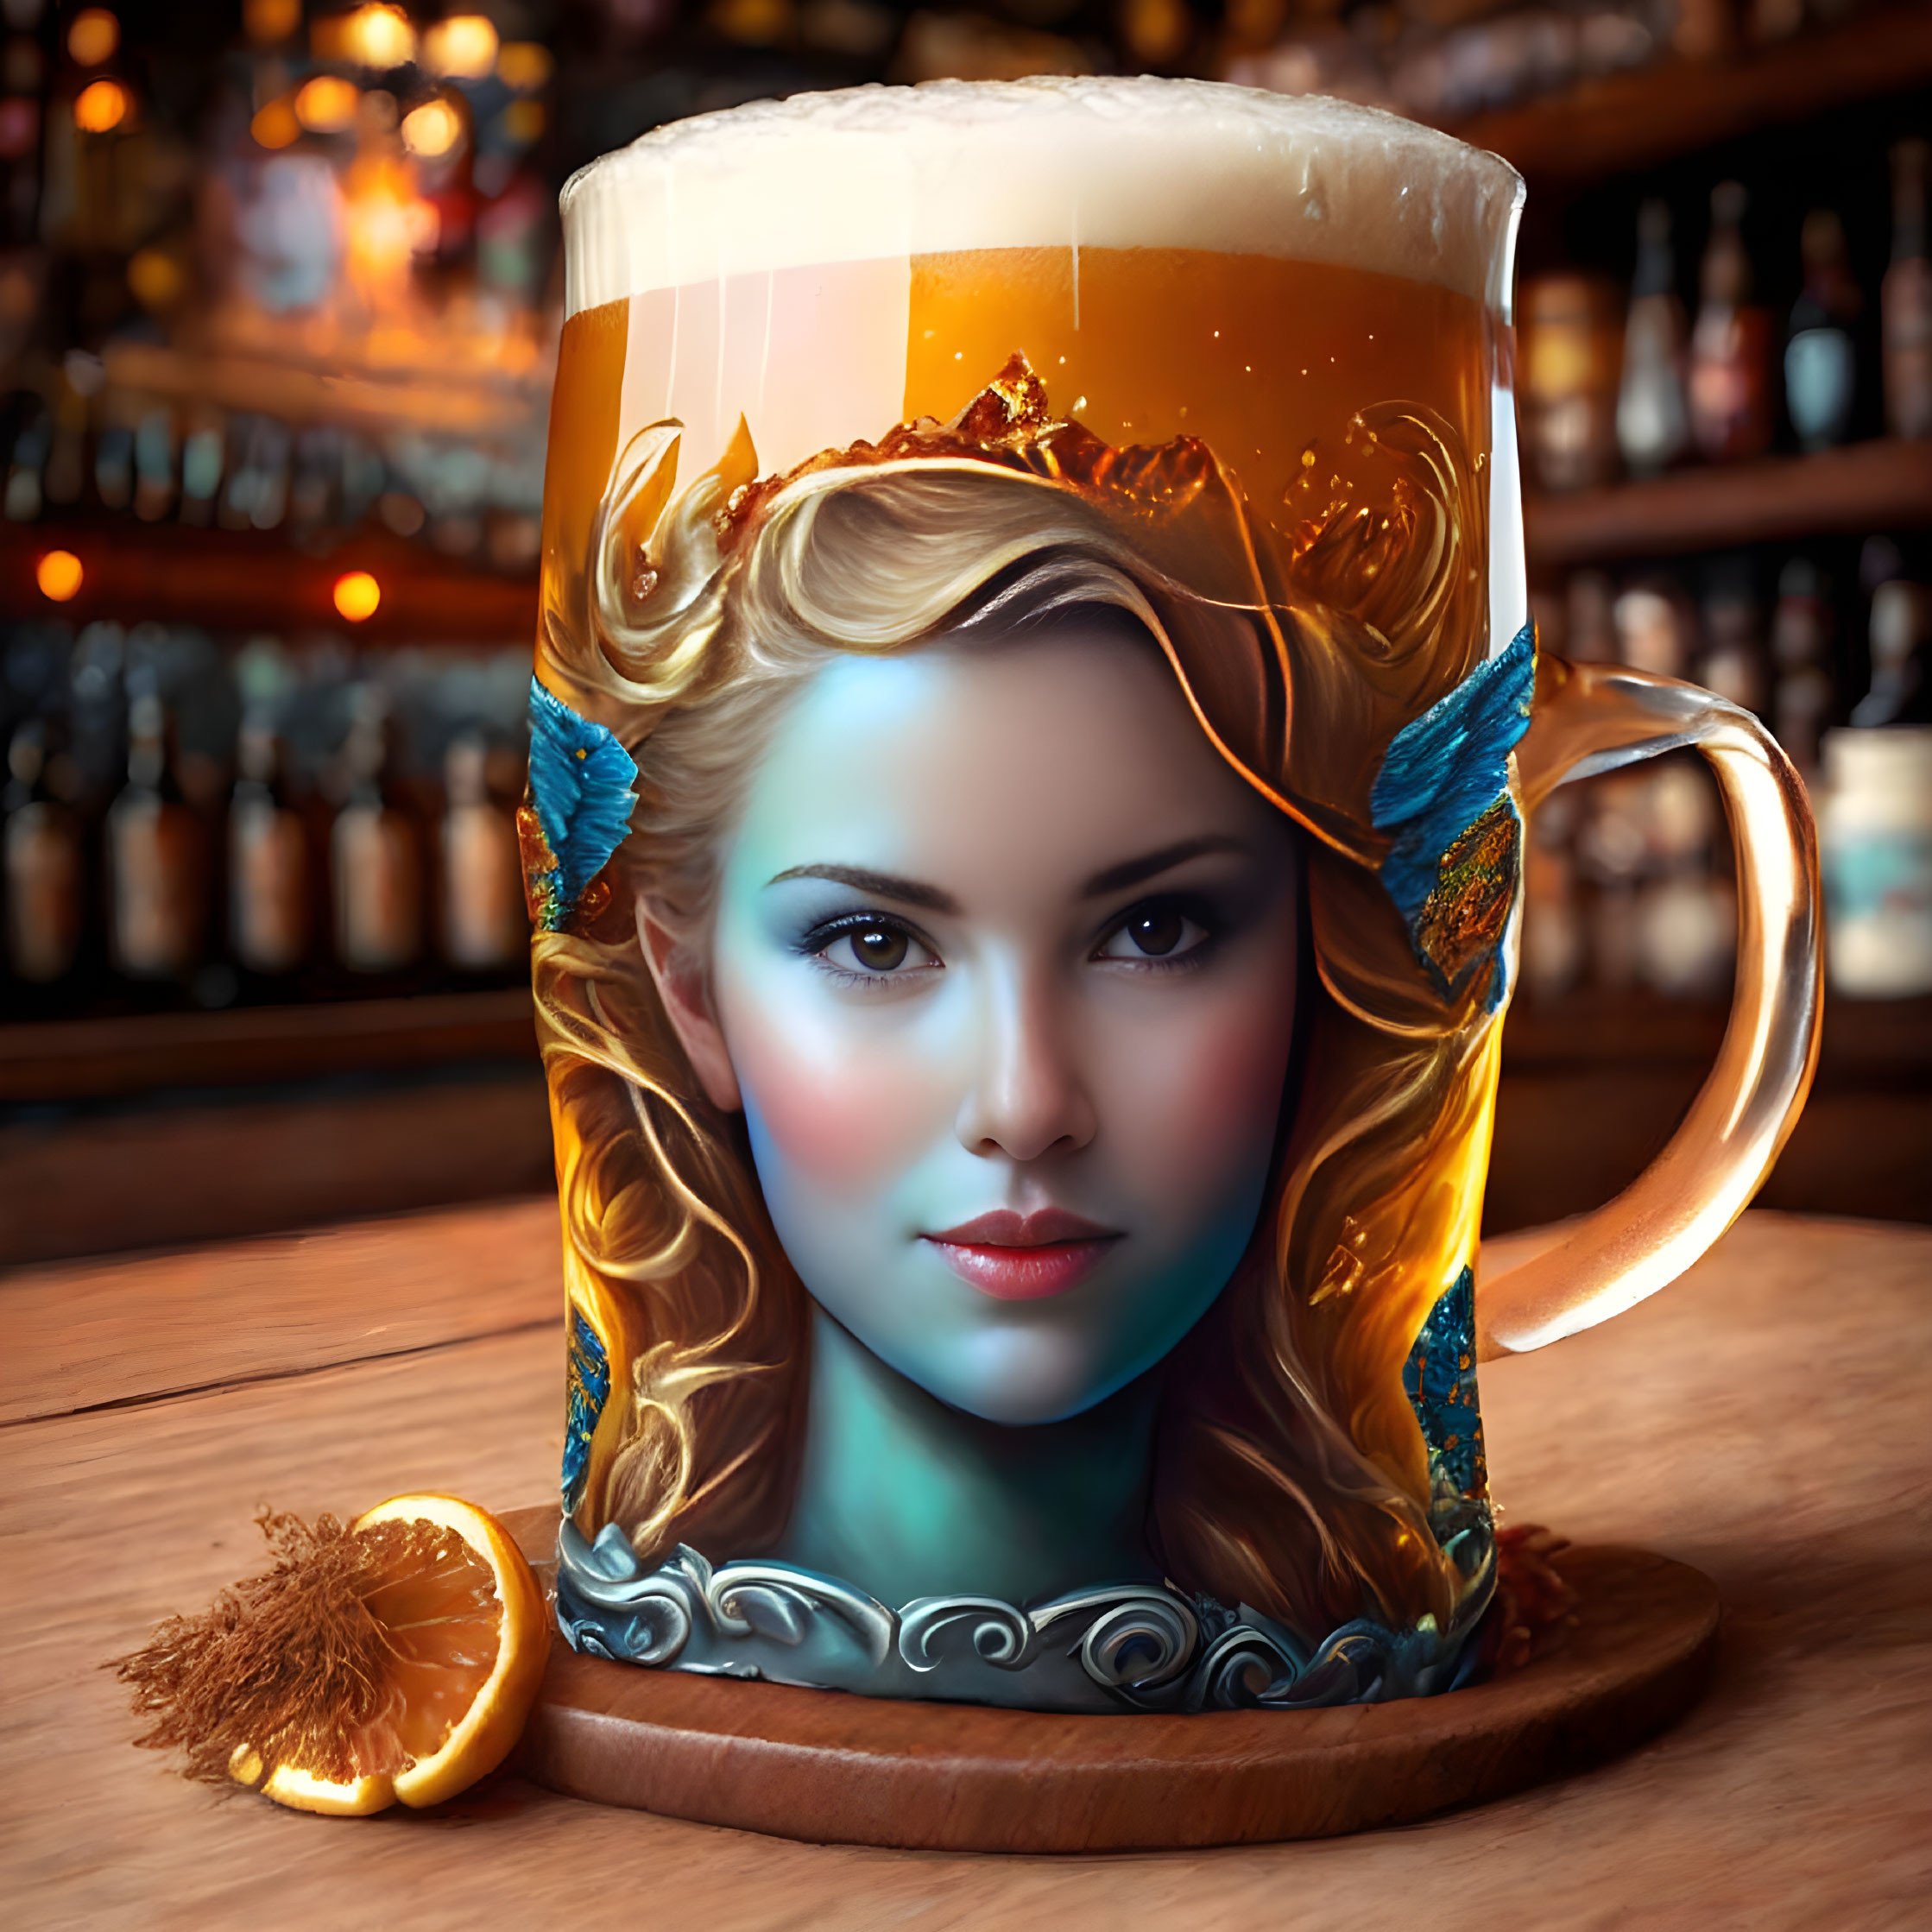 Detailed digital beer mug with woman's face, ornate patterns, and orange slice on bar top